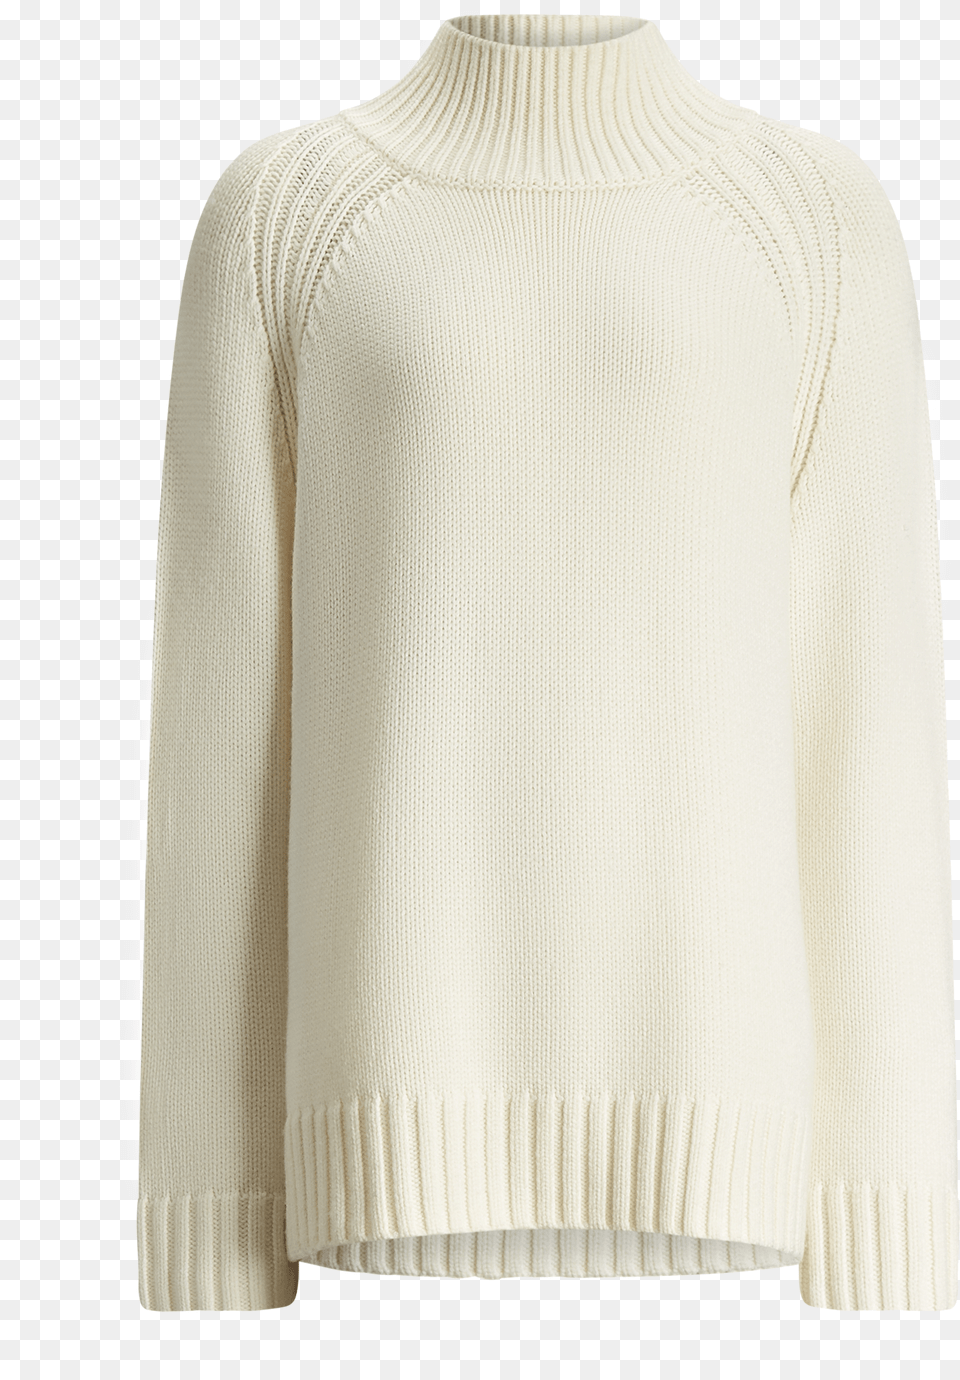 New High Neck Sloppy Joe Knit Sweater, Clothing, Knitwear, Sweatshirt Png